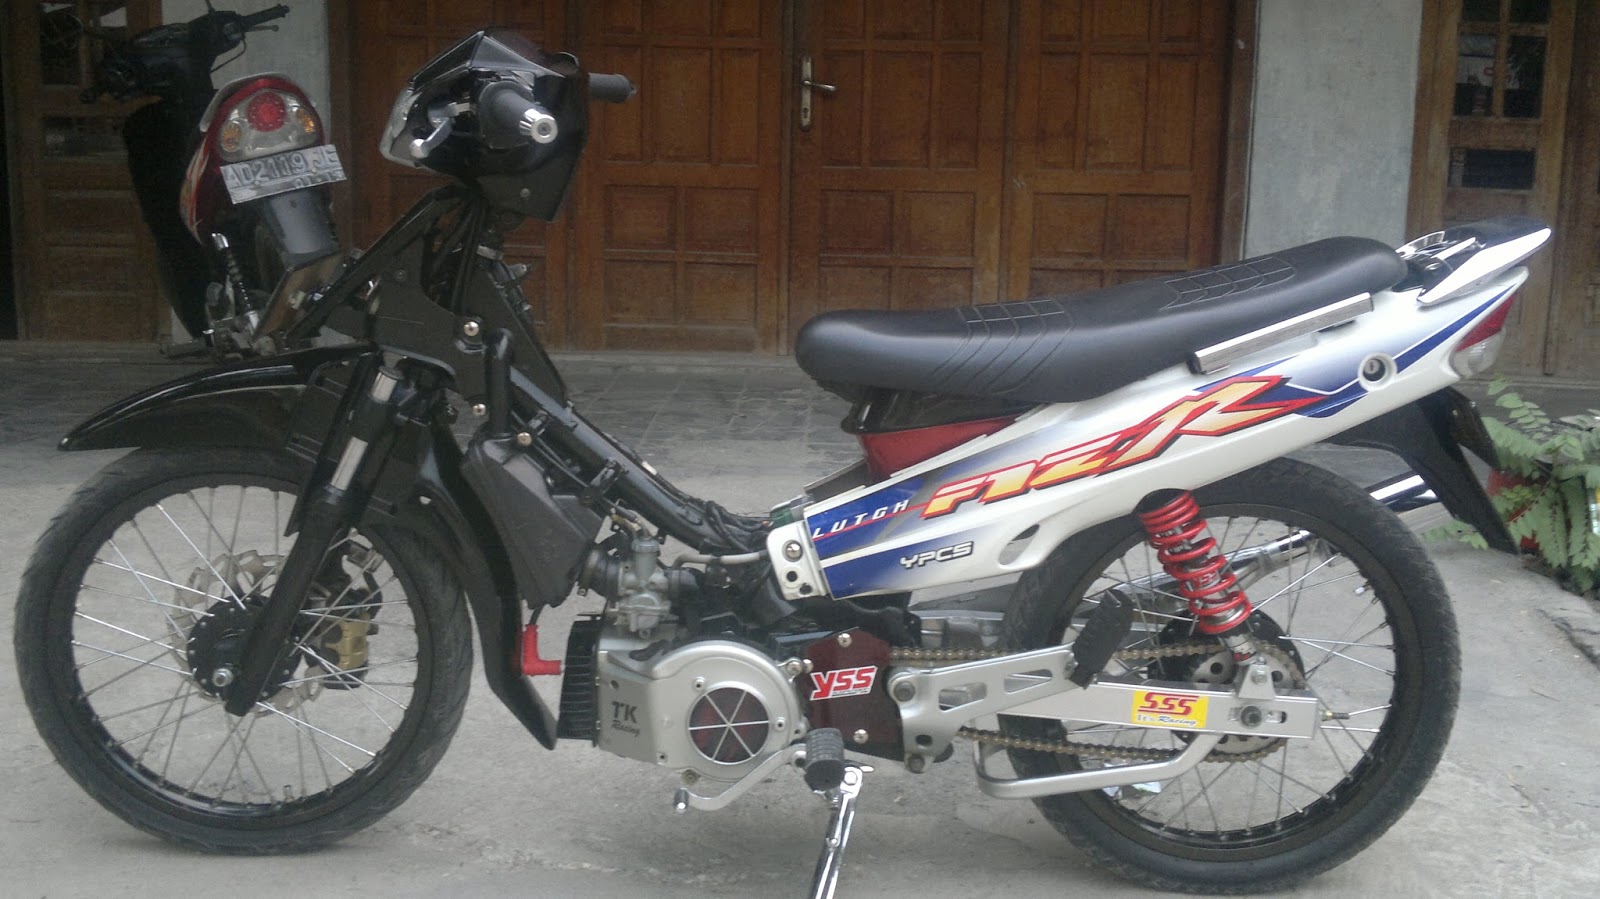 86 Modifikasi Motor Yamaha Fiz R Terlengkap Kinyis Motor